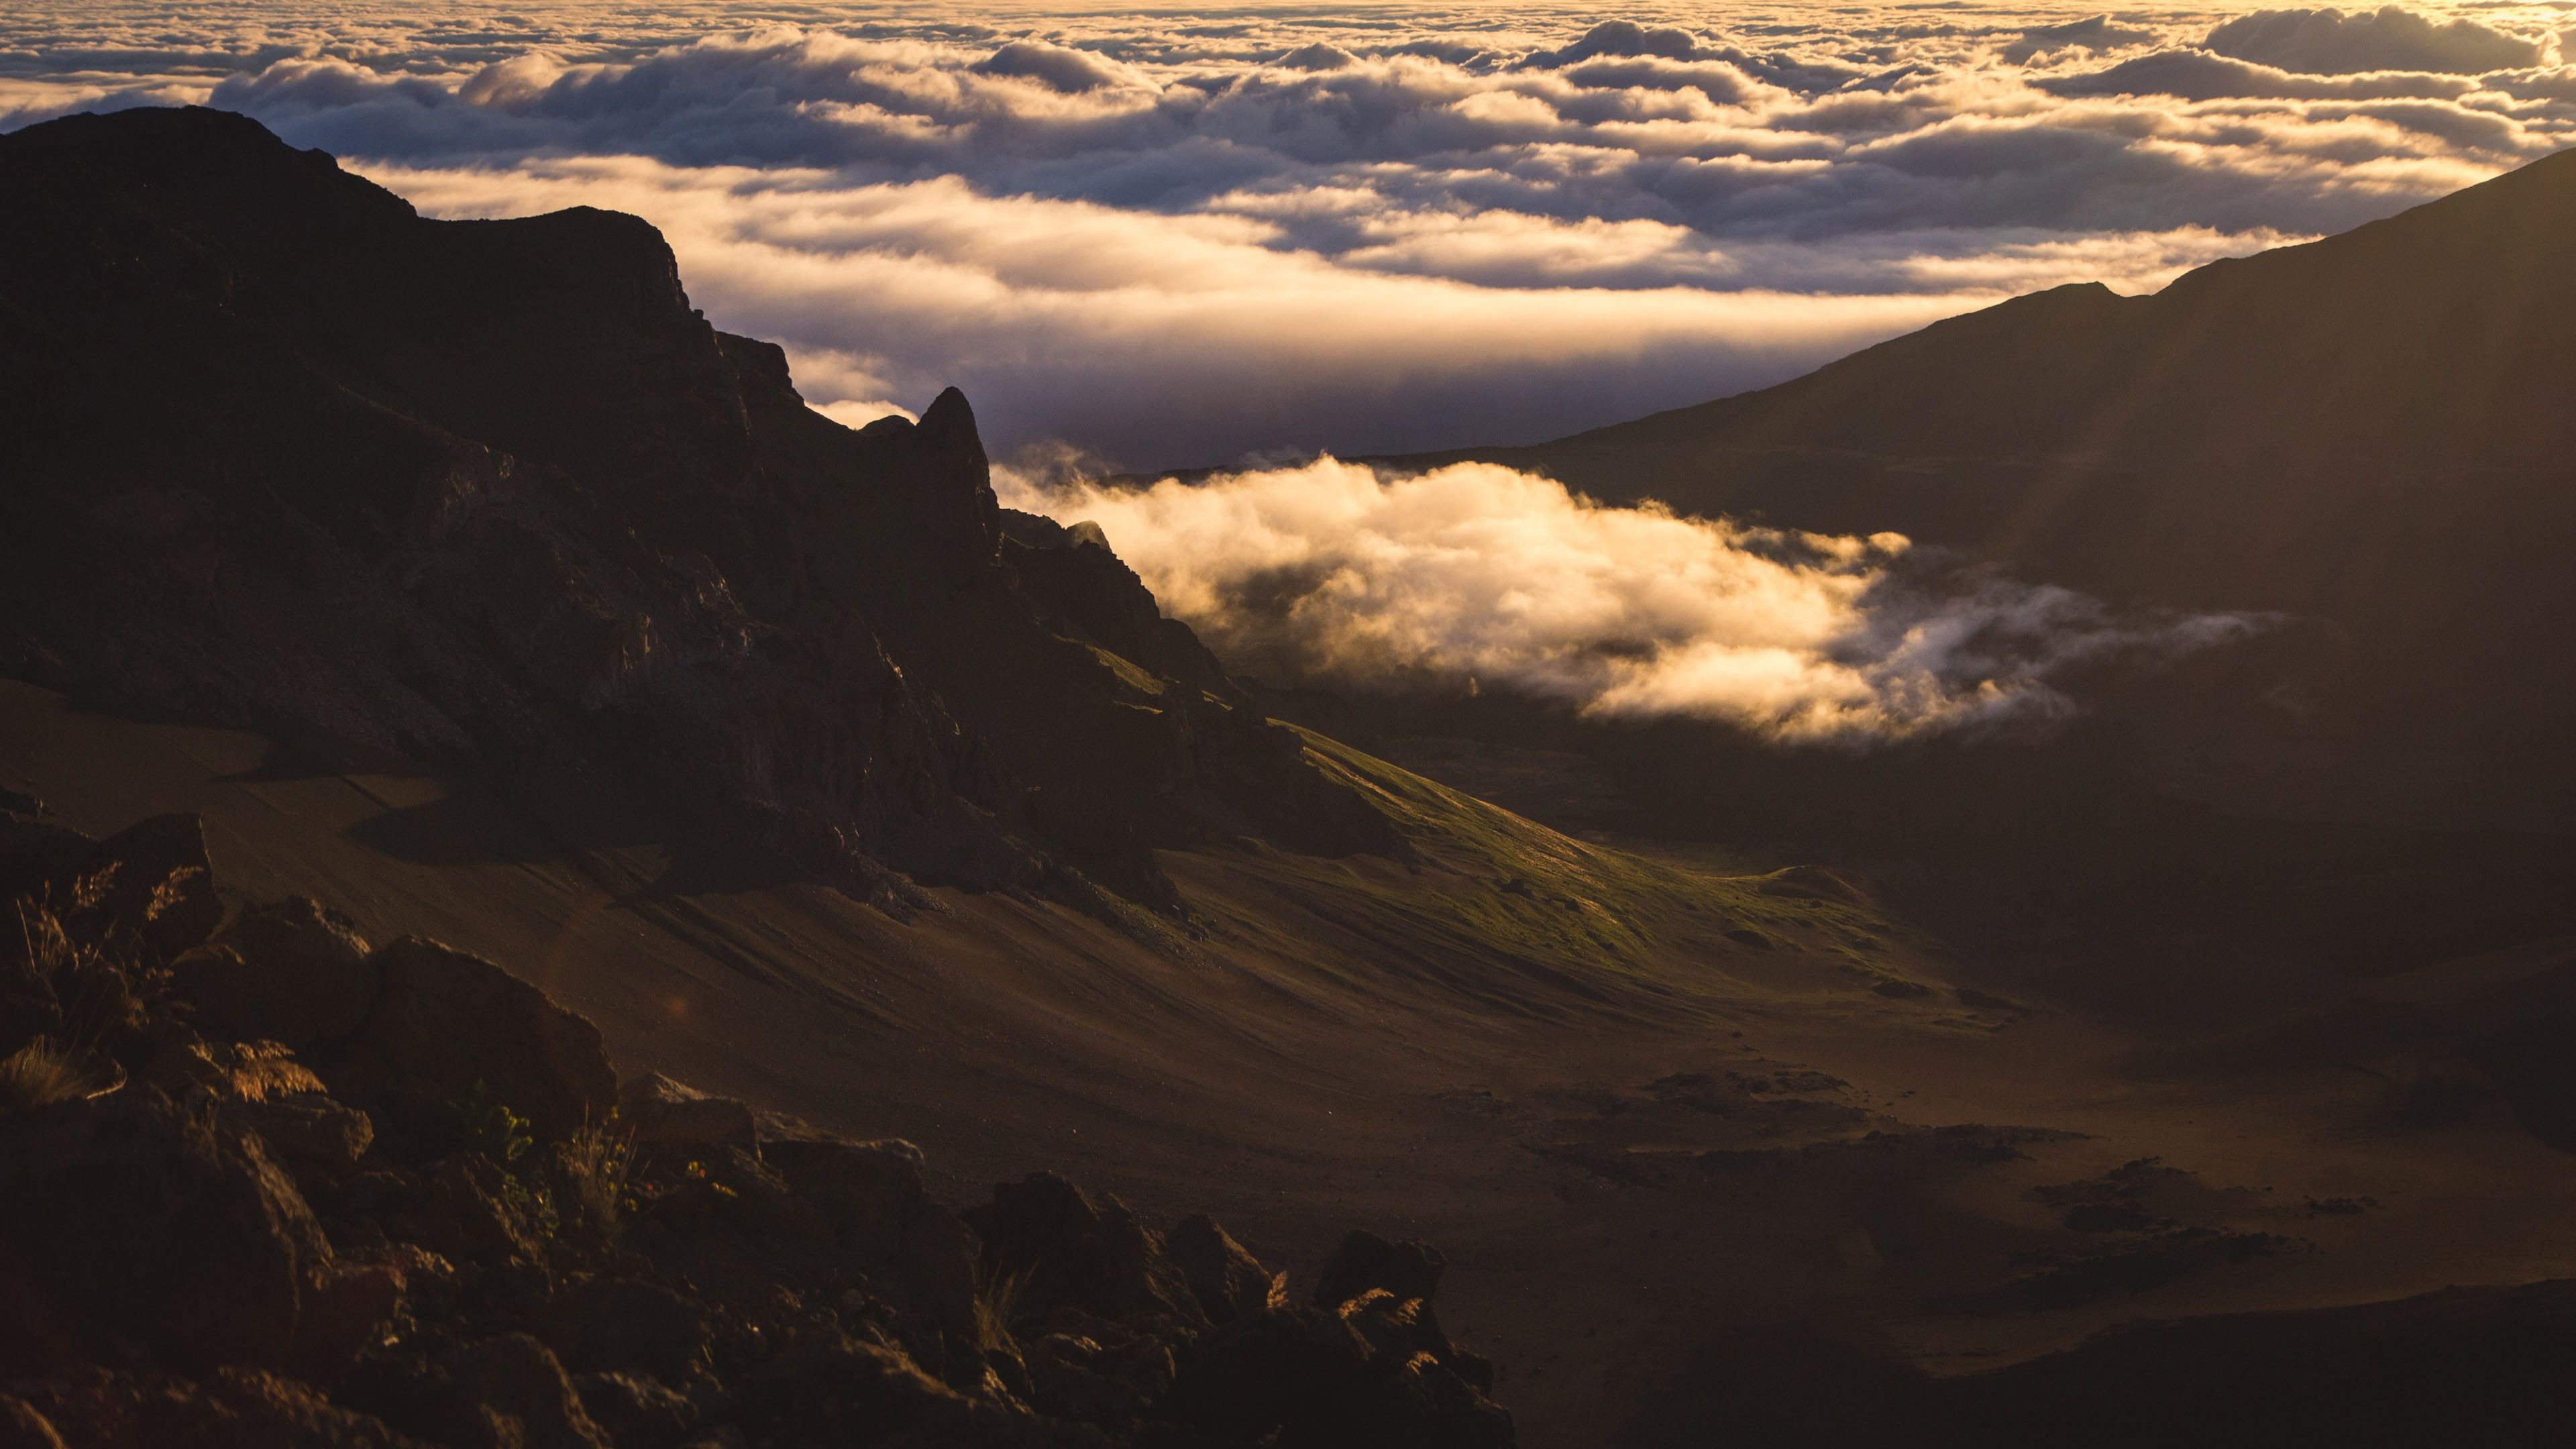 Clouds across a mountain in Haleakala National Park in Maui